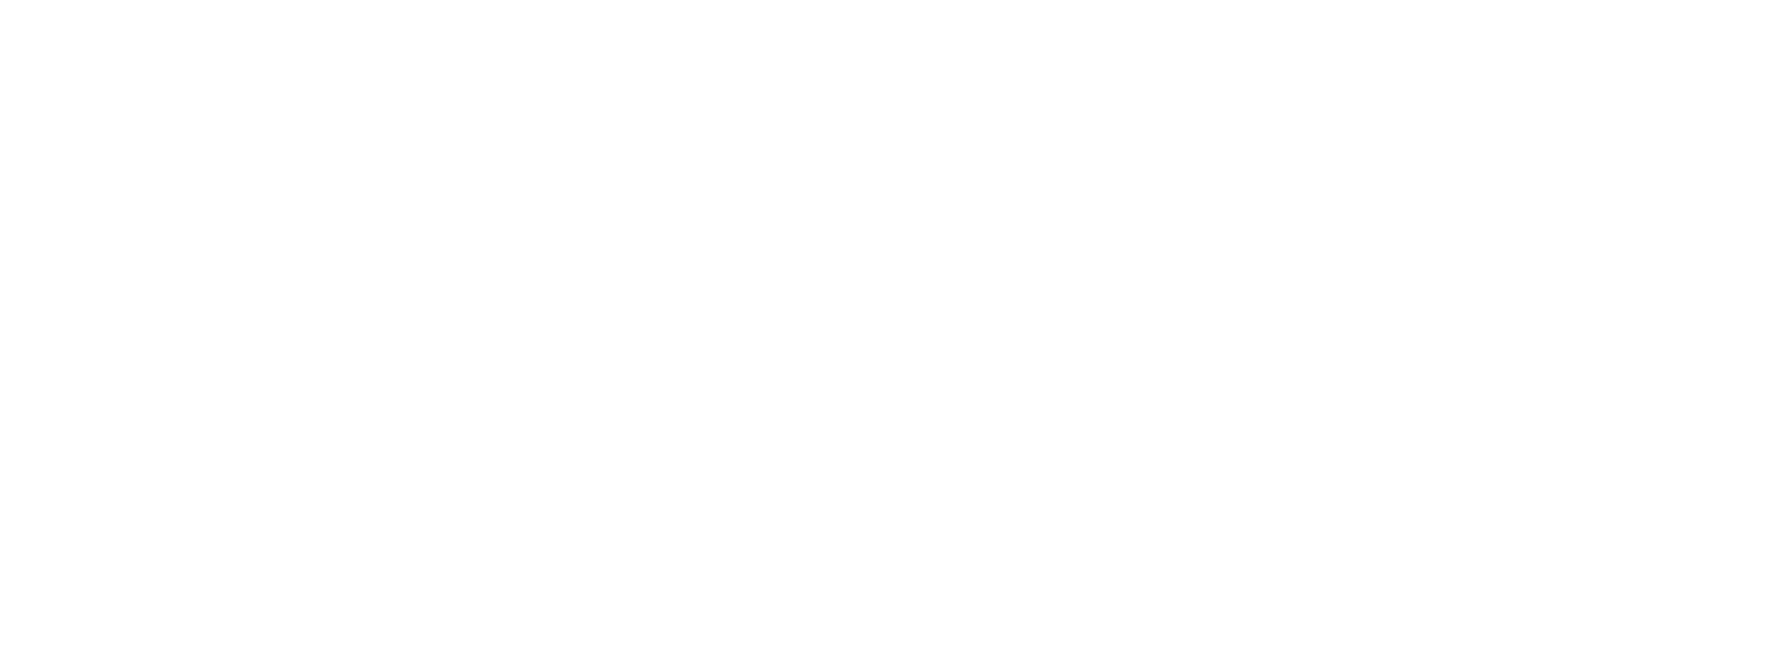 CITE-logo--all-white1